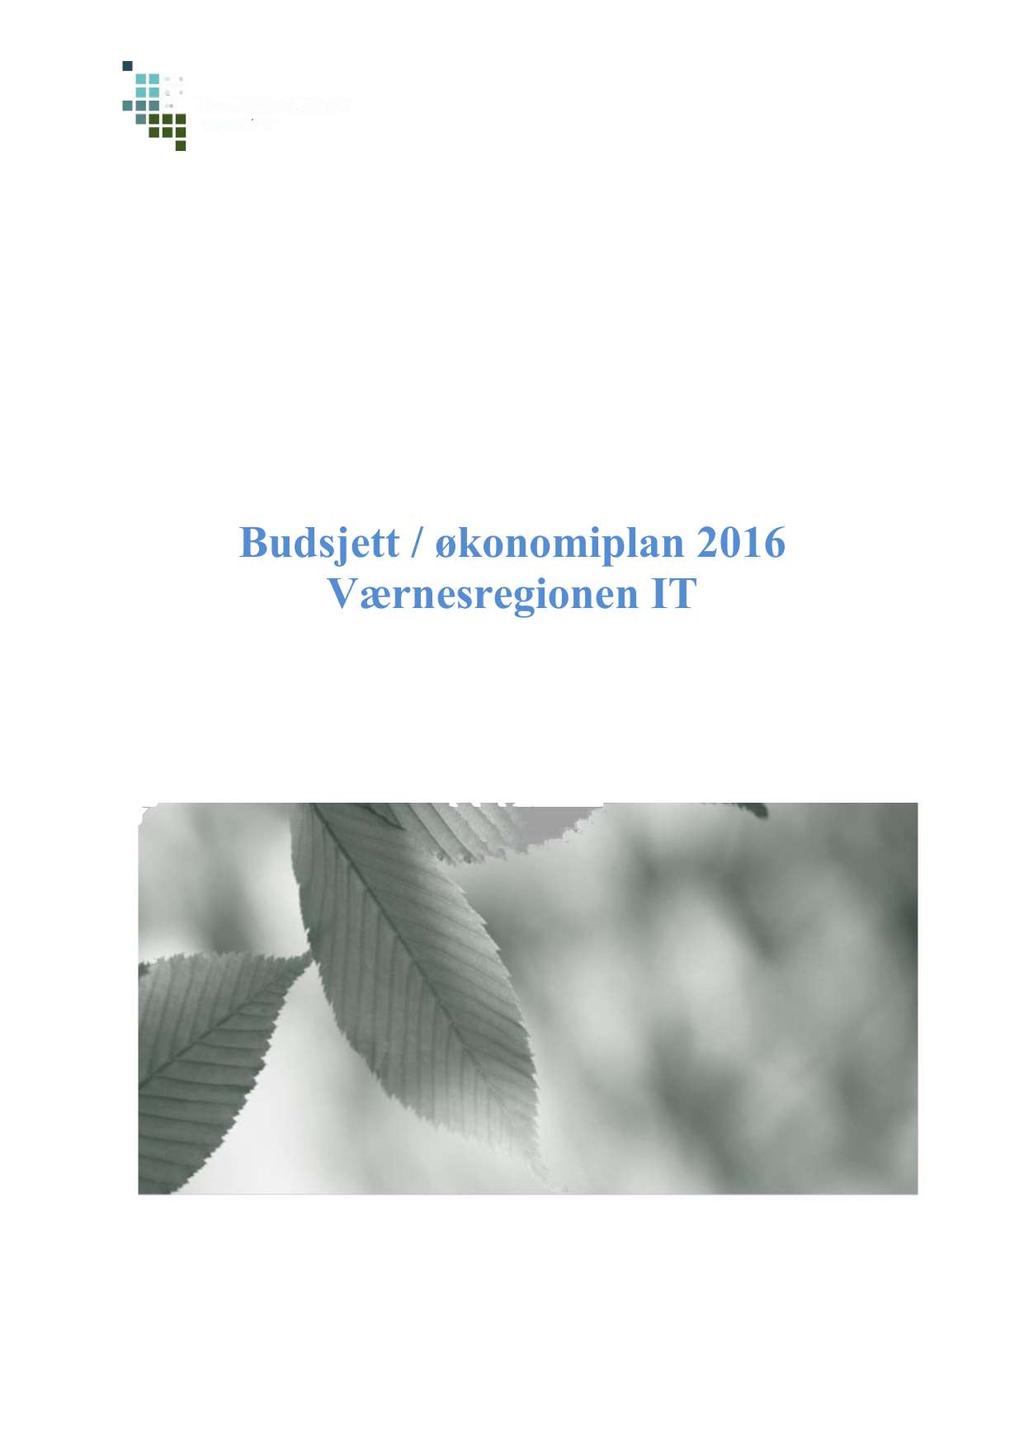 Værnesregi onen IT budjett/økonomiplan 2016